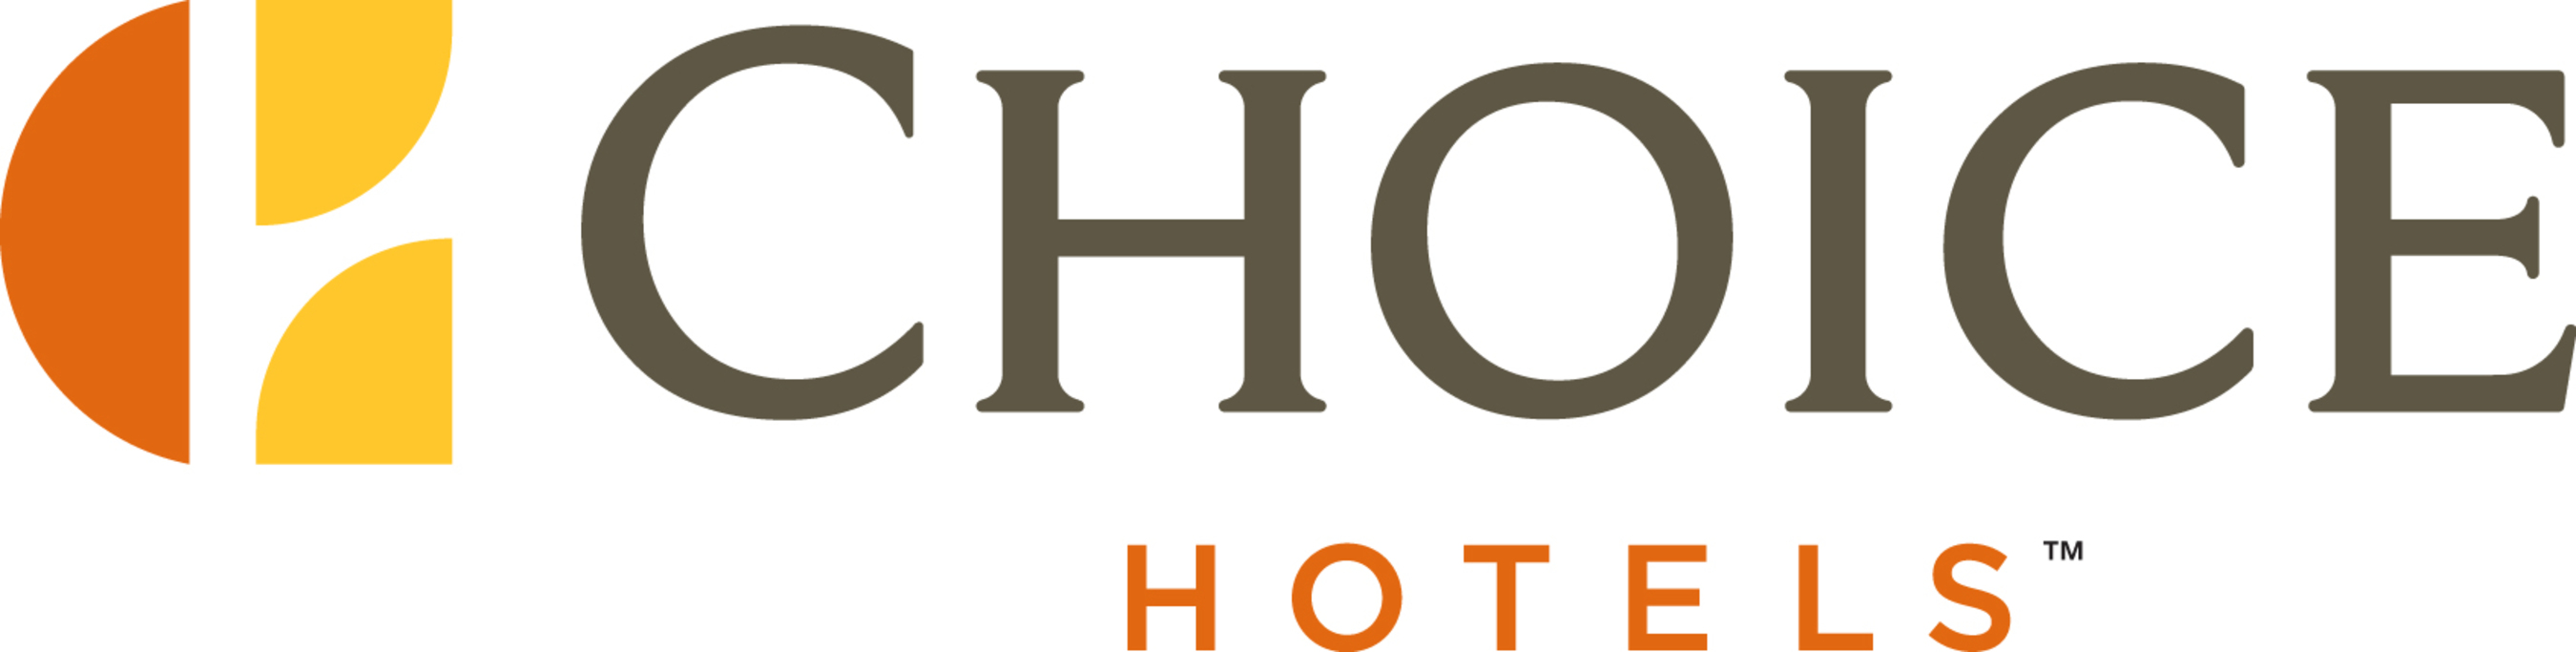 Comfort Inn Hotel Brand Announces It Will Go Smoke-Free ...
